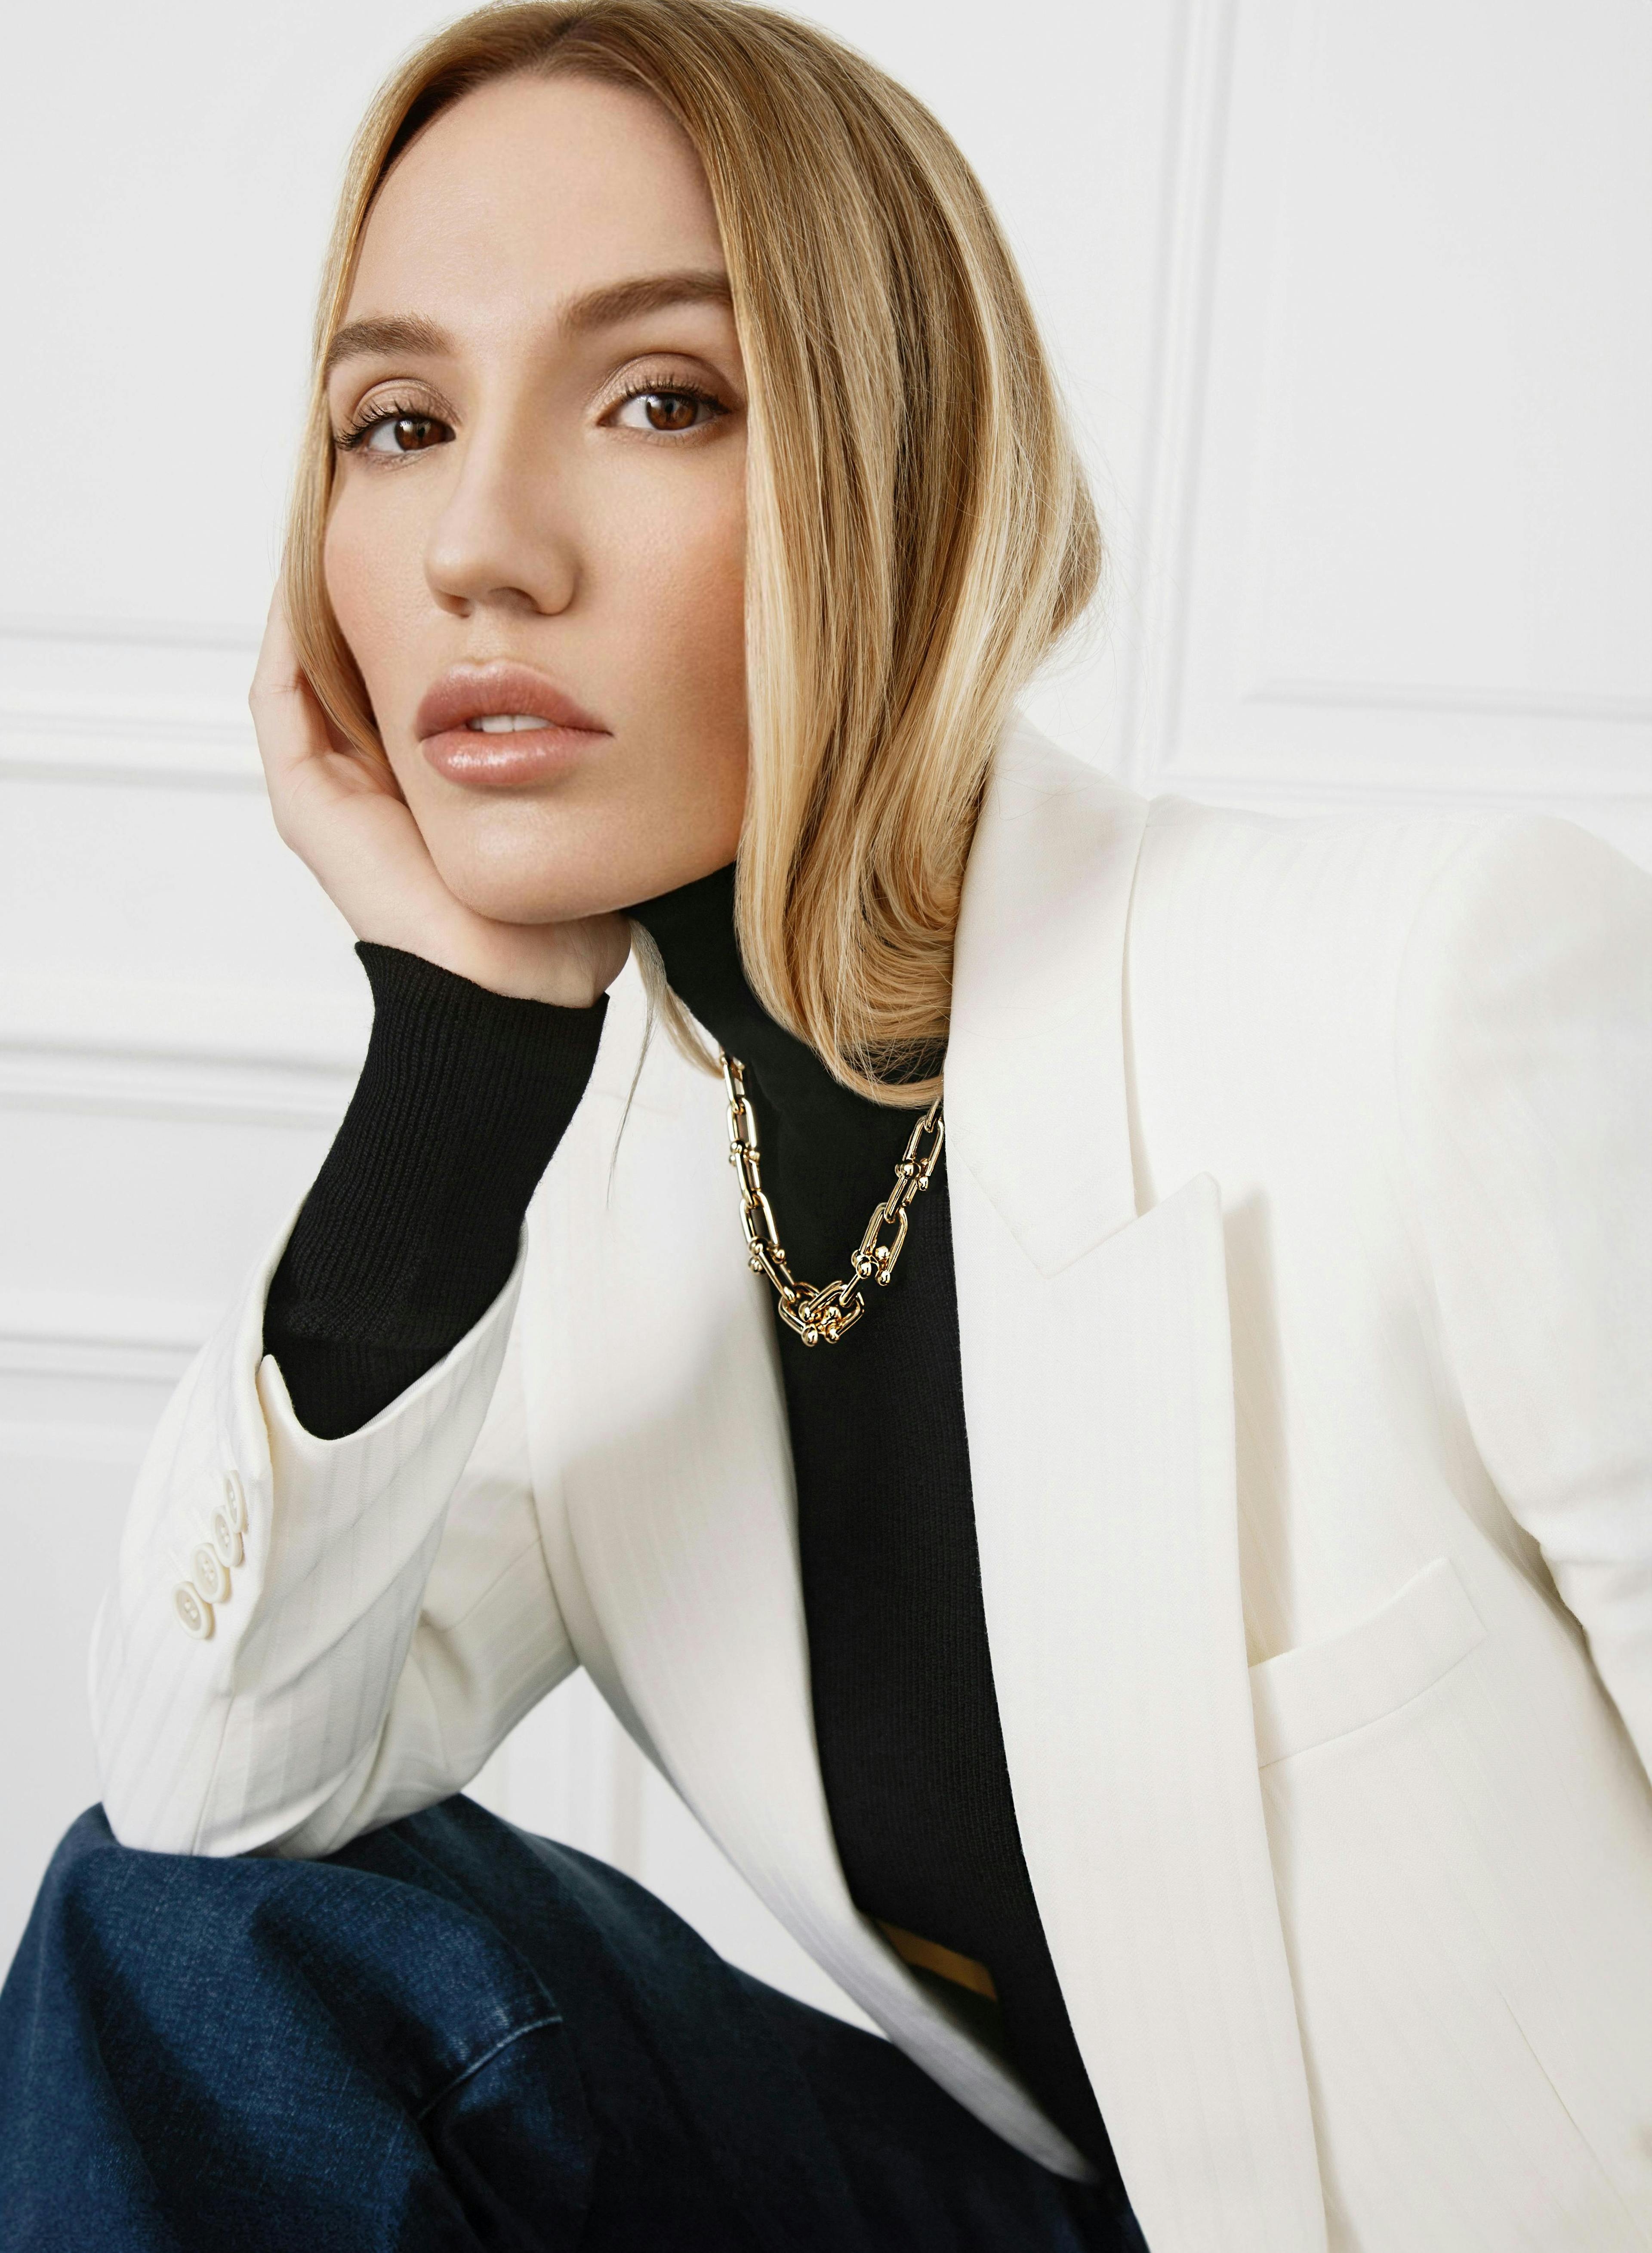 Jacket: Yves Saint Laurent, Jeans: Céline, Shoes: Magda Butrym, Jewelry: Tiffany & Co